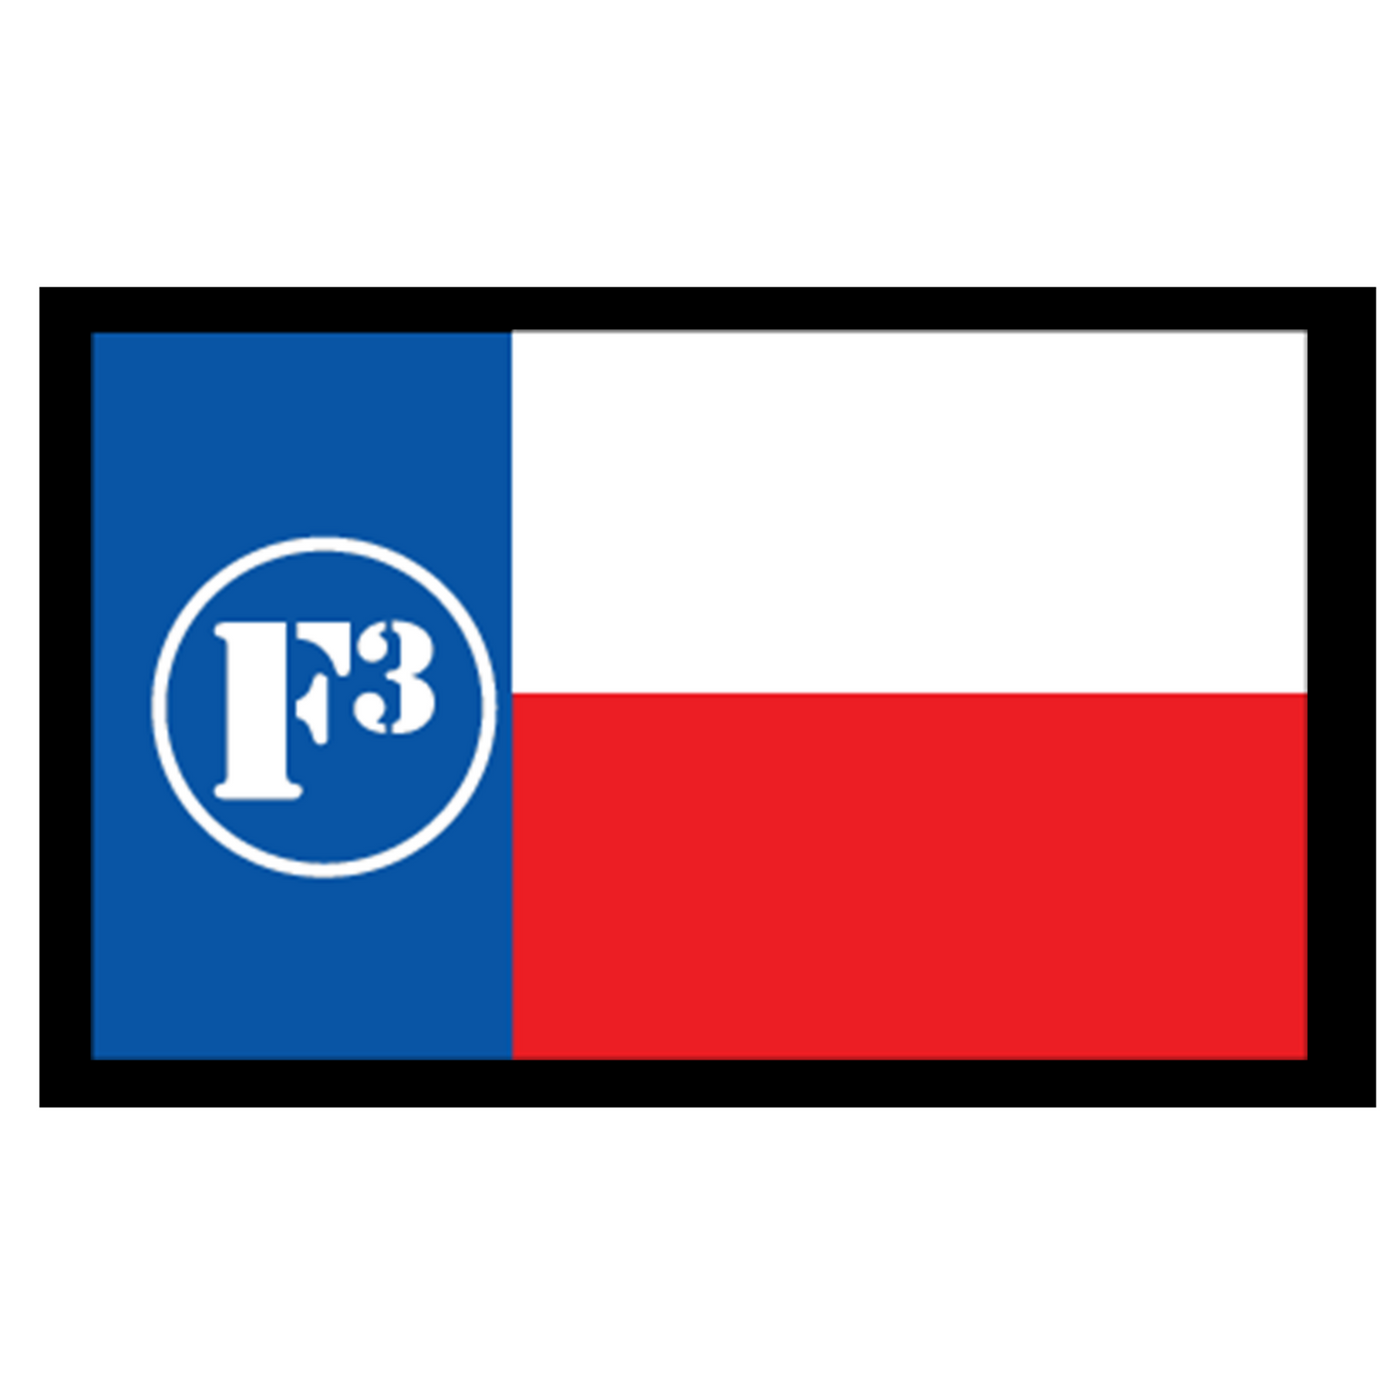 F3 Texas Flag Patch